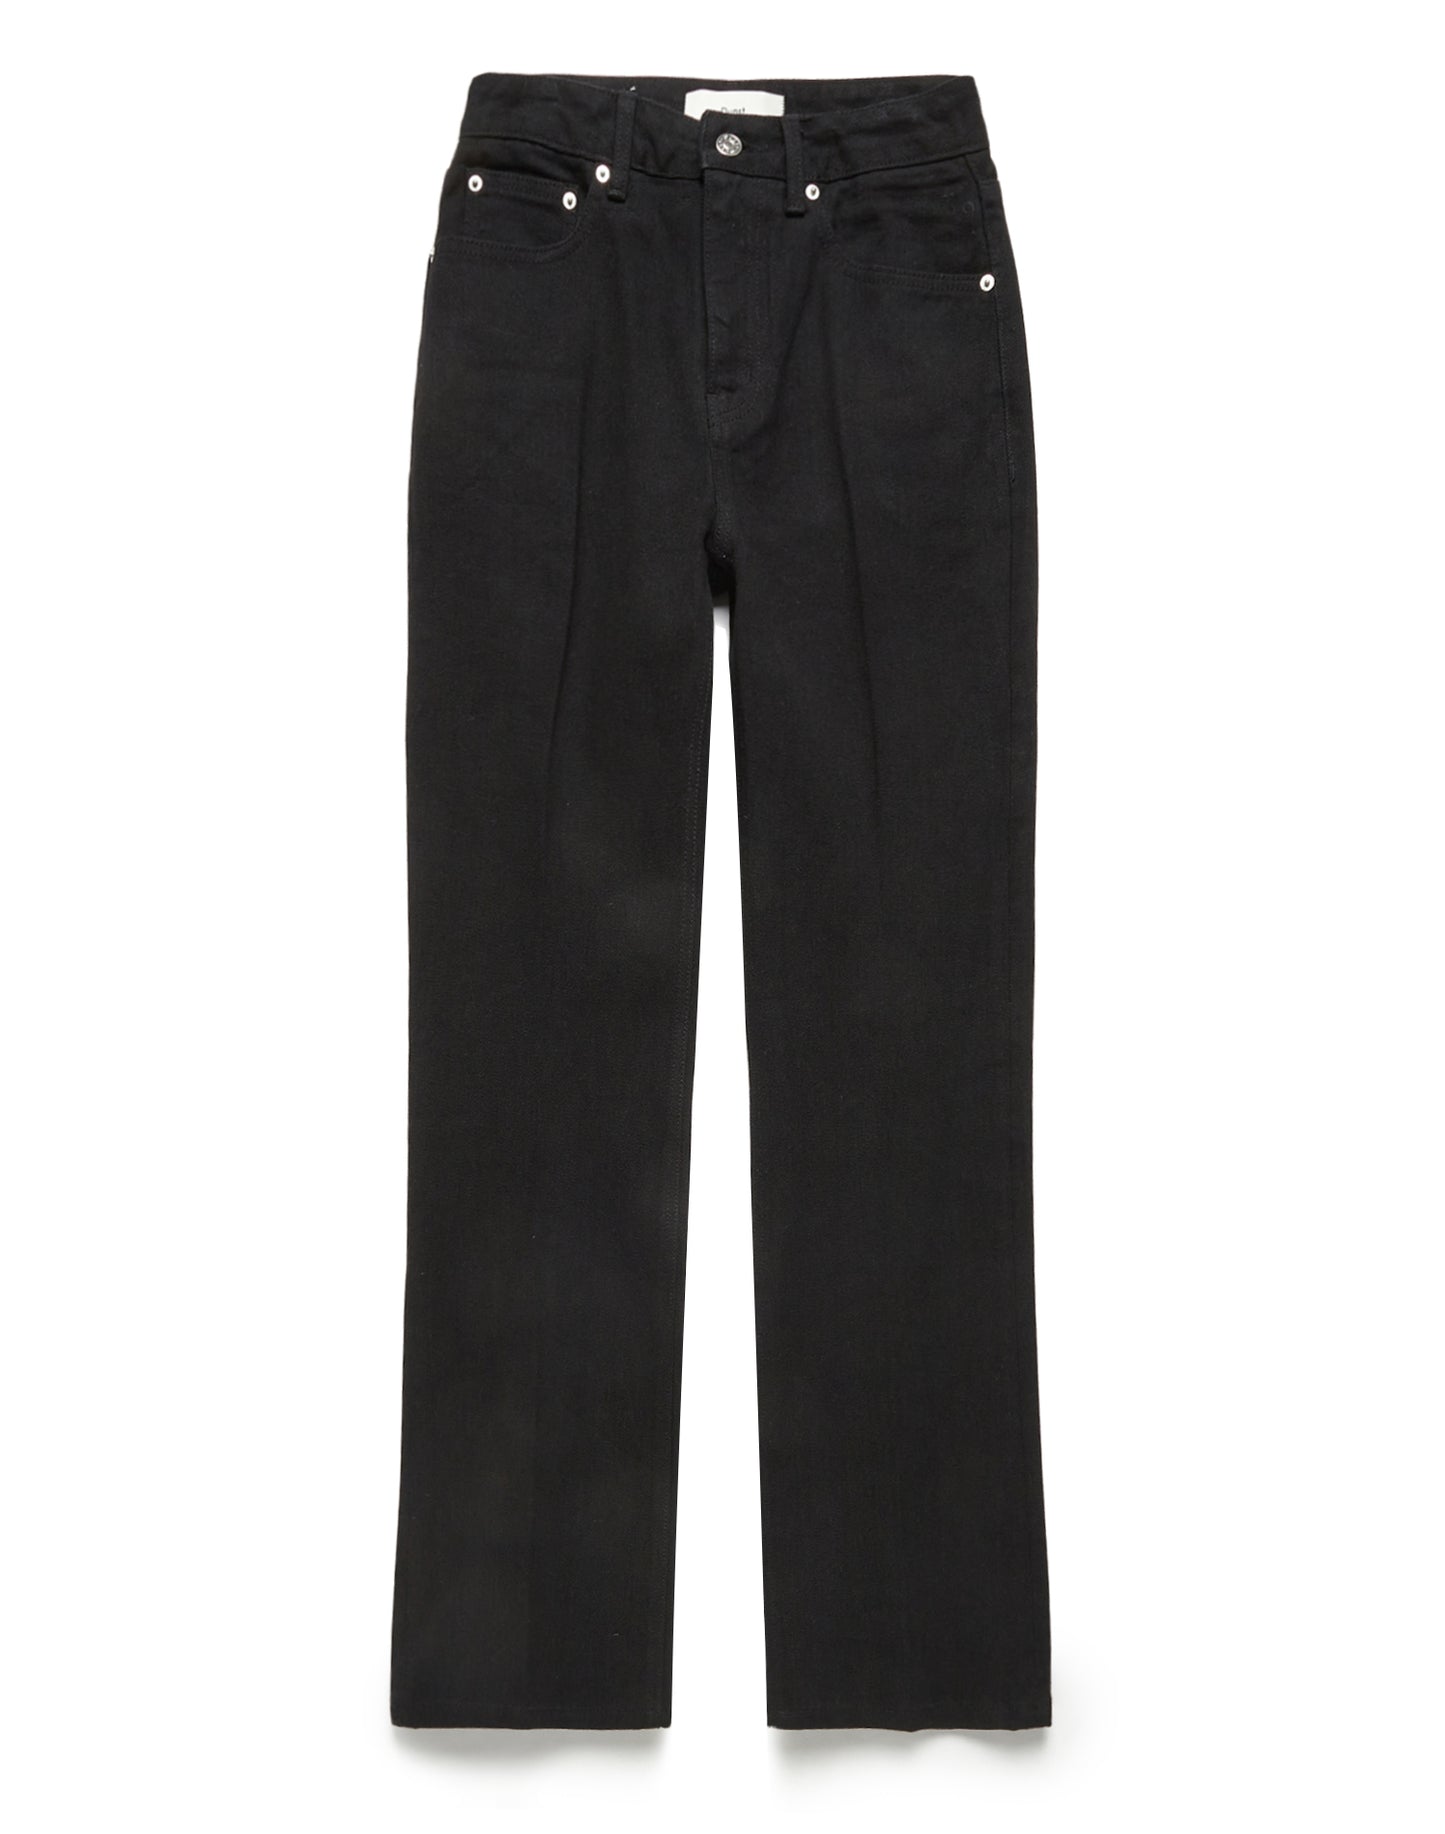 70's Semi Flared Jeans (Black)